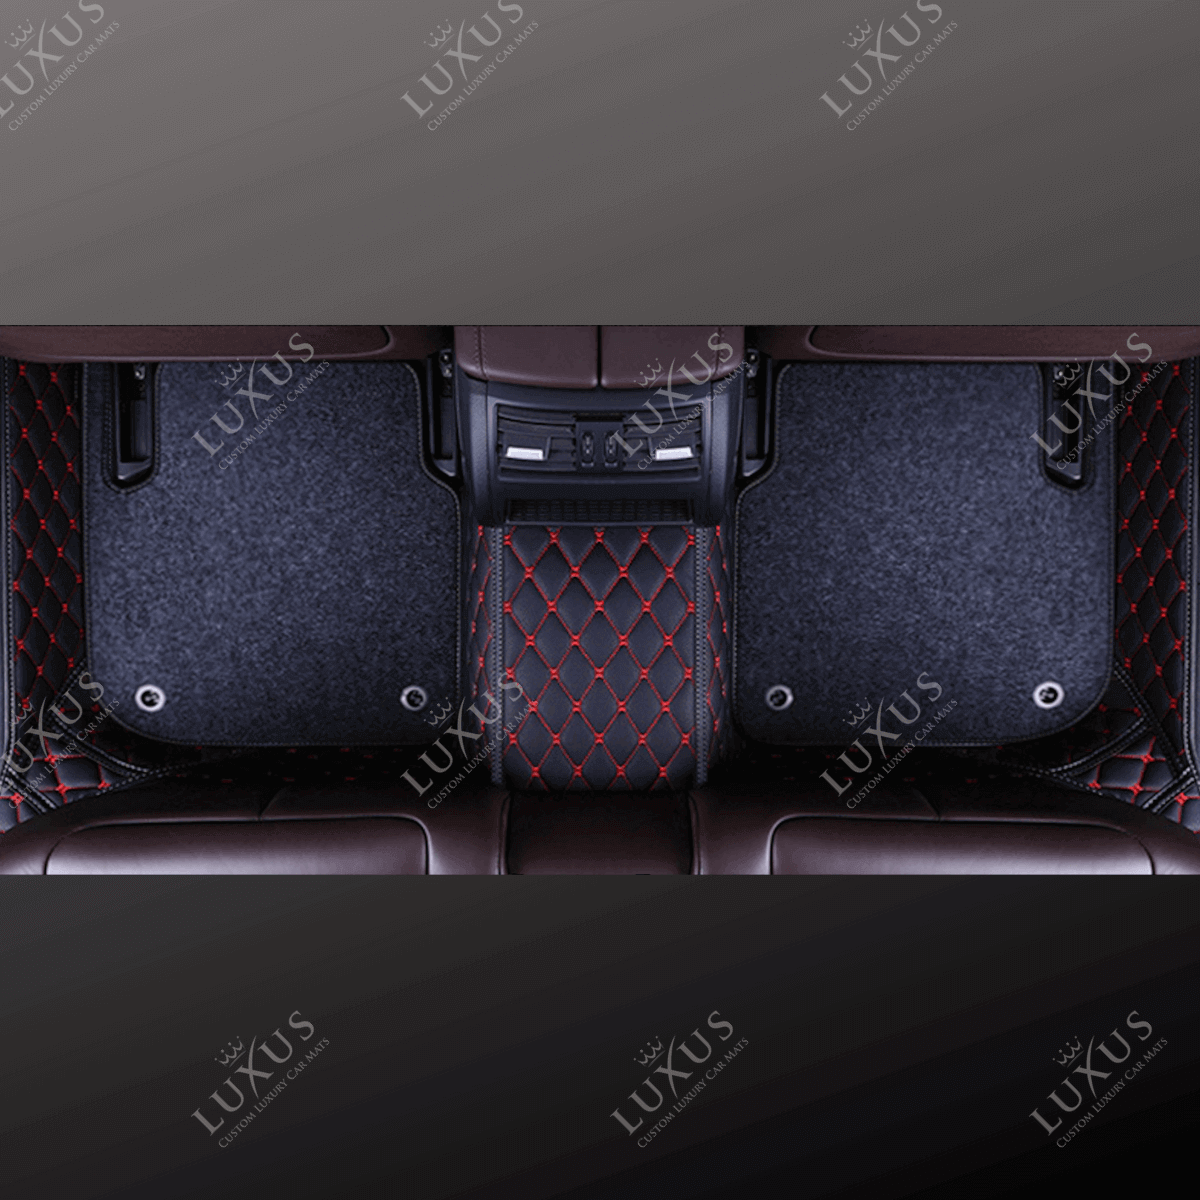 Black & Red Diamond Stitching Base & Grey Top Carpet Double Layer Luxury Car Mats Set